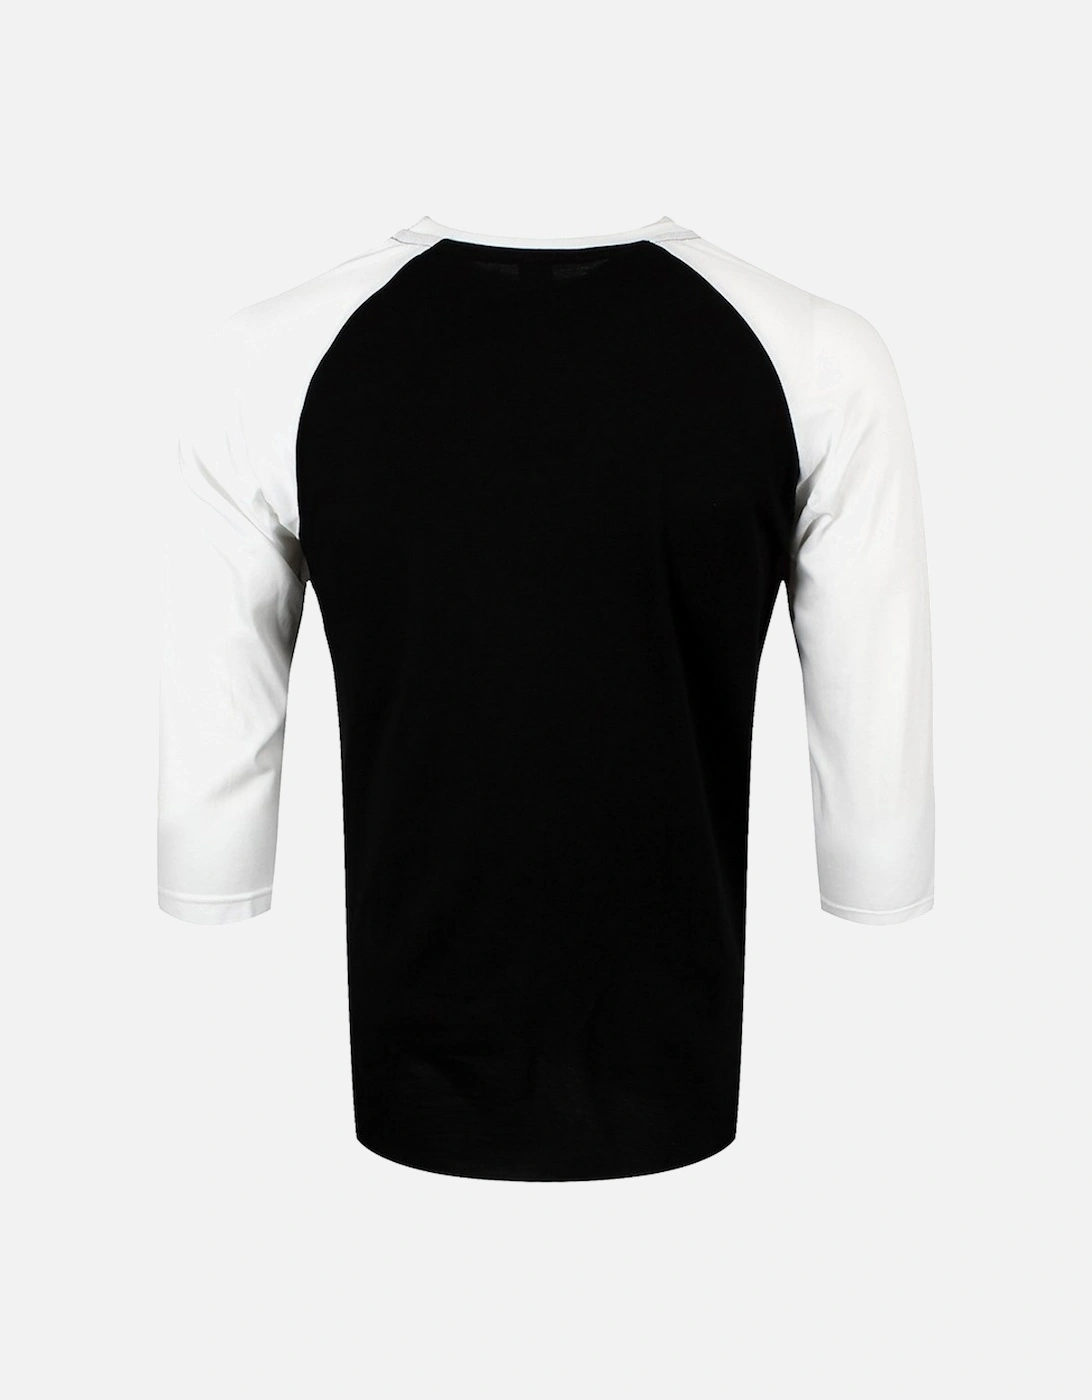 Unisex Adult Ray Gun Cotton Raglan T-Shirt